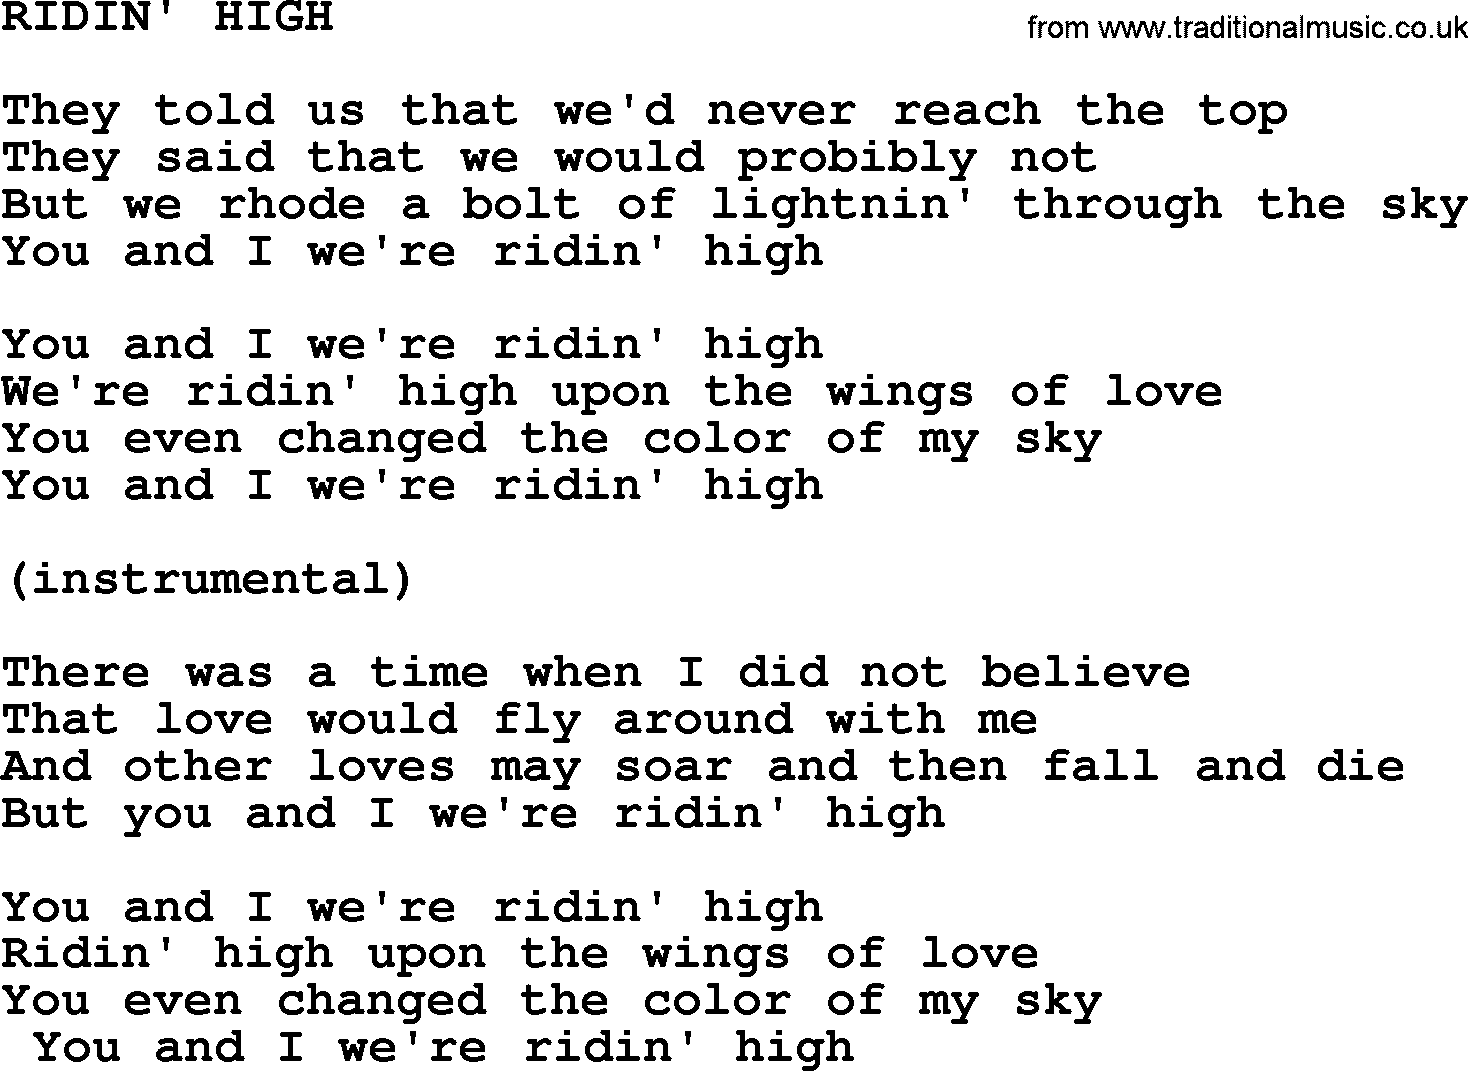 Merle Haggard song: Ridin' High, lyrics.